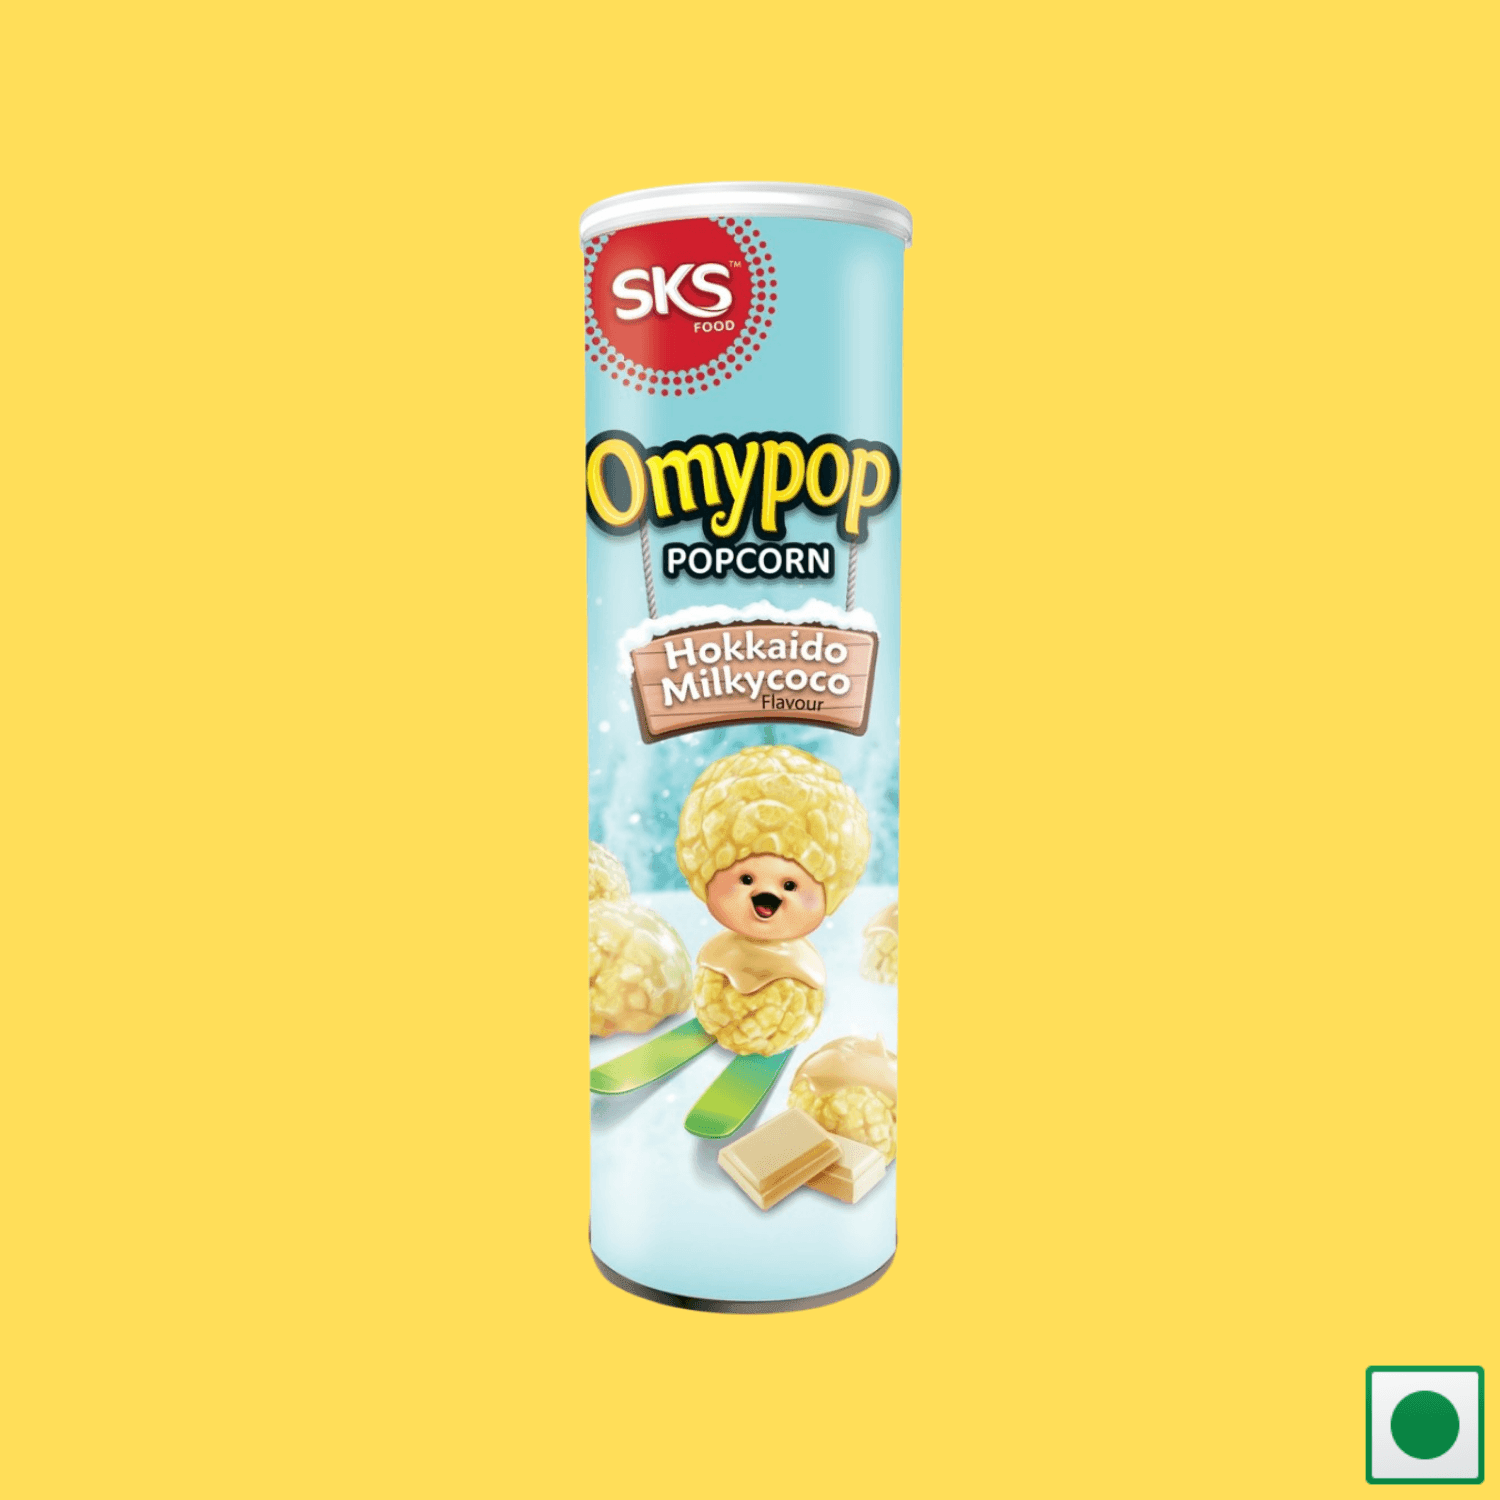 Omypop Popcorn - Hokkaido Milkycoco Flavour, 85g (IMPORTED) - Super 7 Mart